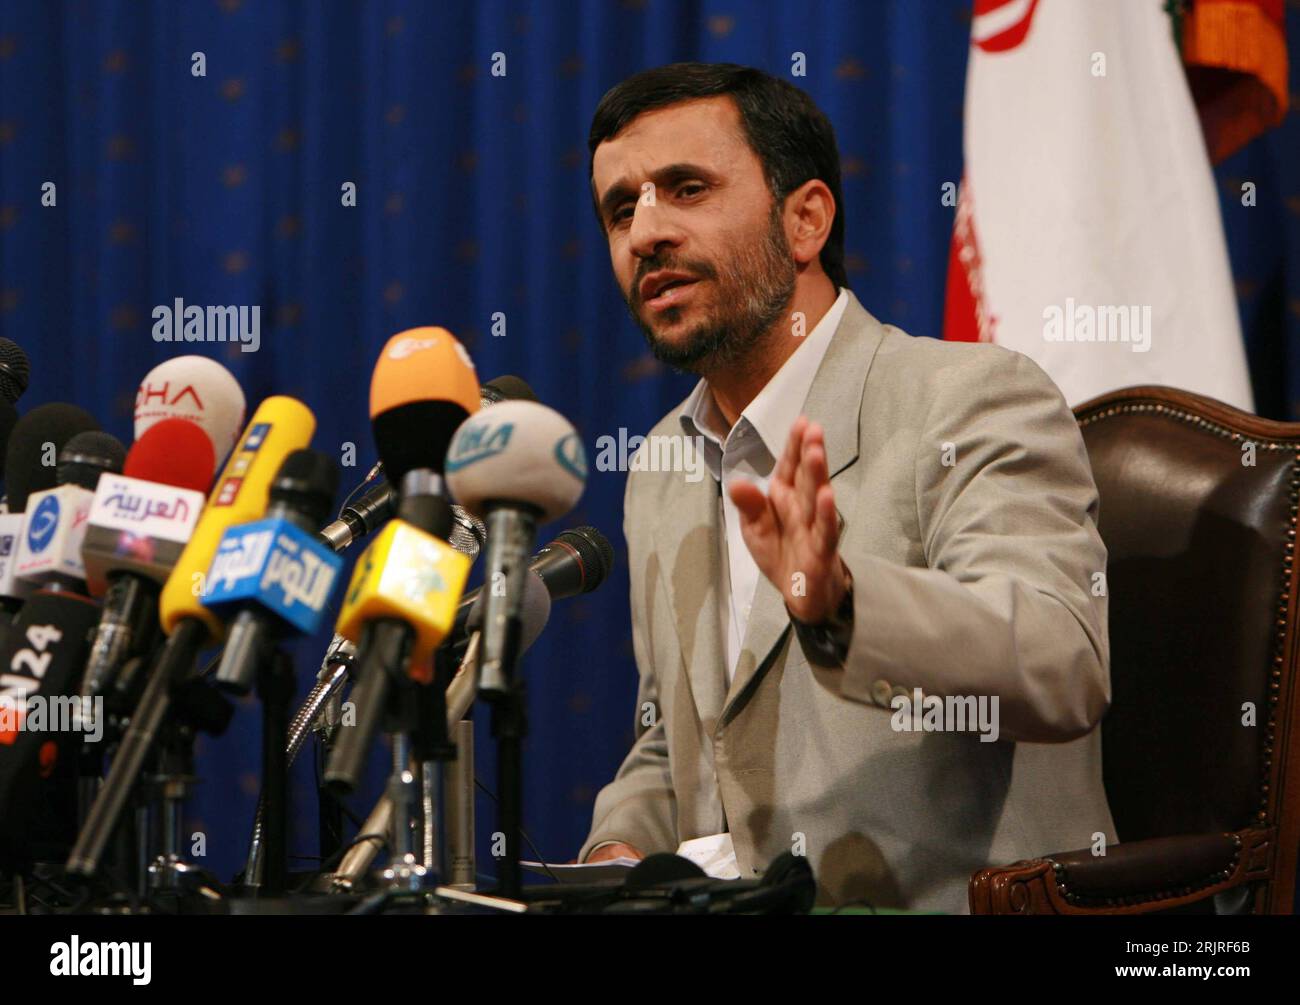 Bildnummer: 51405446 Datum: 29.08.2006 Copyright: imago/Xinhua Präsident Mahmoud Ahmadinedschad (IRI) während einer Pressekonferenz in Teheran - PUBLICATIONxNOTxINxCHN, Personen; 2006, Teheran, Politiker, Politik, Gestik, richtungsweisend, Mikrofon, Mikrofon, , Pressekonferenz , Pressetermin, Ahmadinedschad, Ahmadinezhad, Ahmadi, Neschad, Nedschad, Staatspräsident; , quer, Kbdig, Einzelbild, Close, Iran, Randbild, Leute Stockfoto